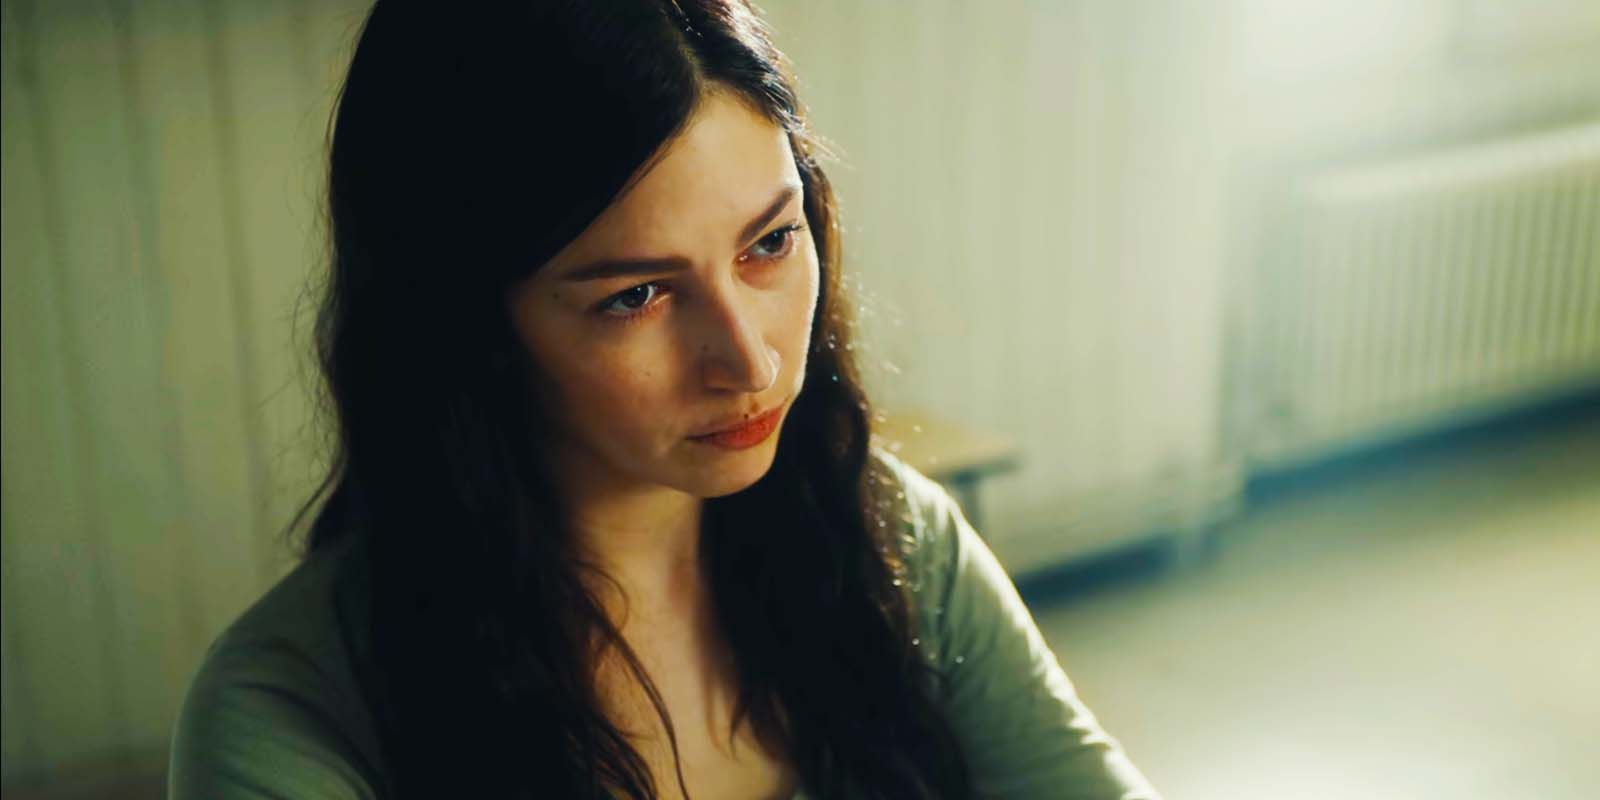 Rsula Corberó als Rosa in der Netflix-Serie „Burning Body“.